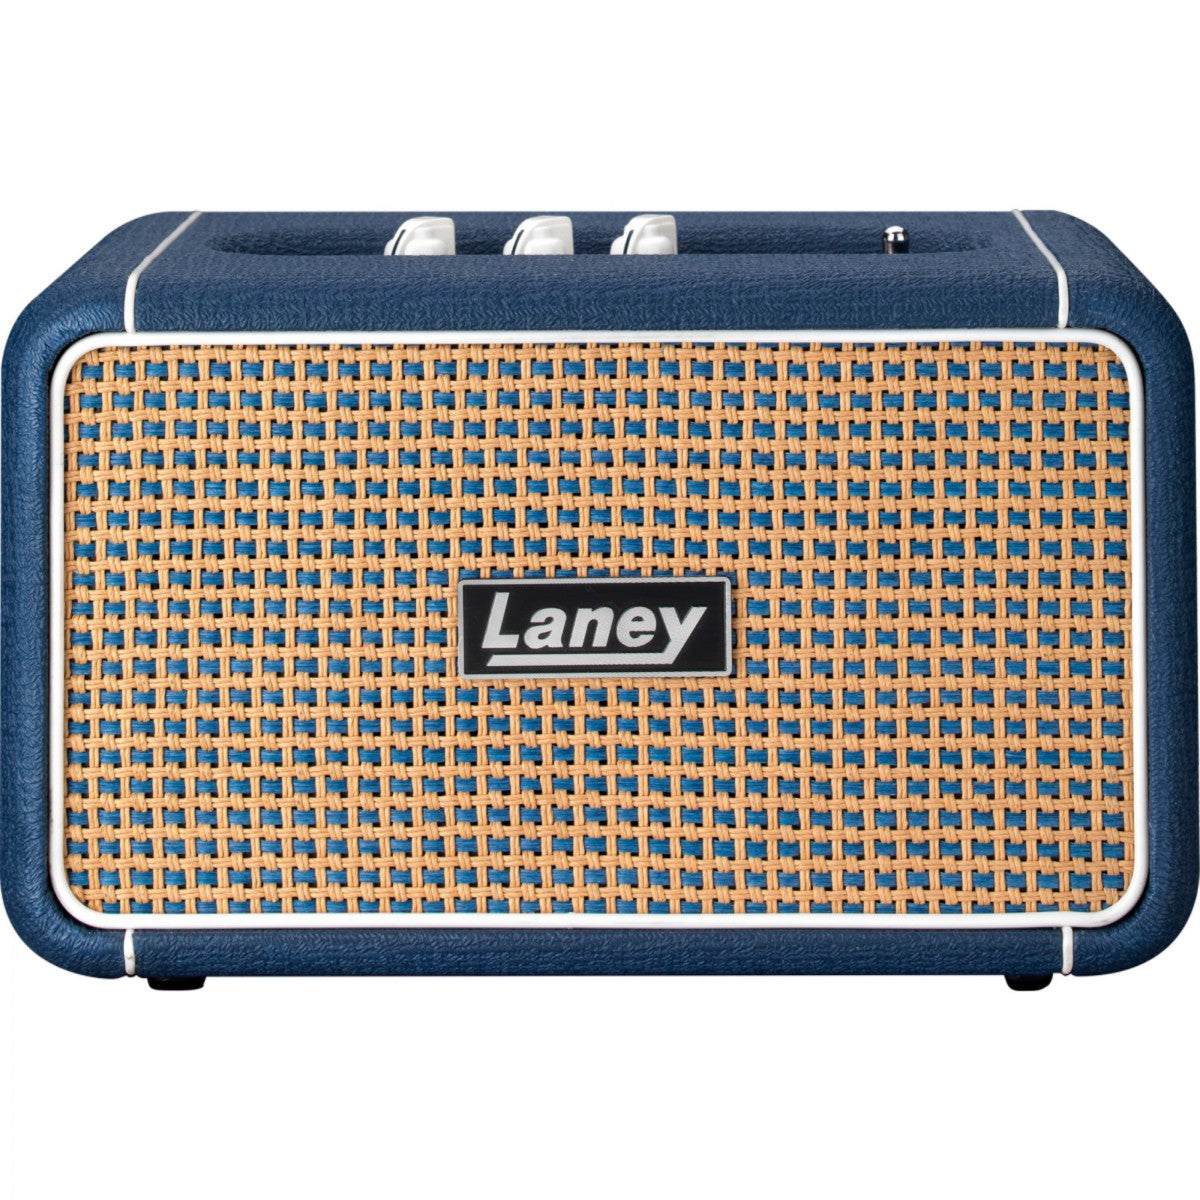 Laney F67-LIONHEART Taşınabilir Bluetooth Hoparlör